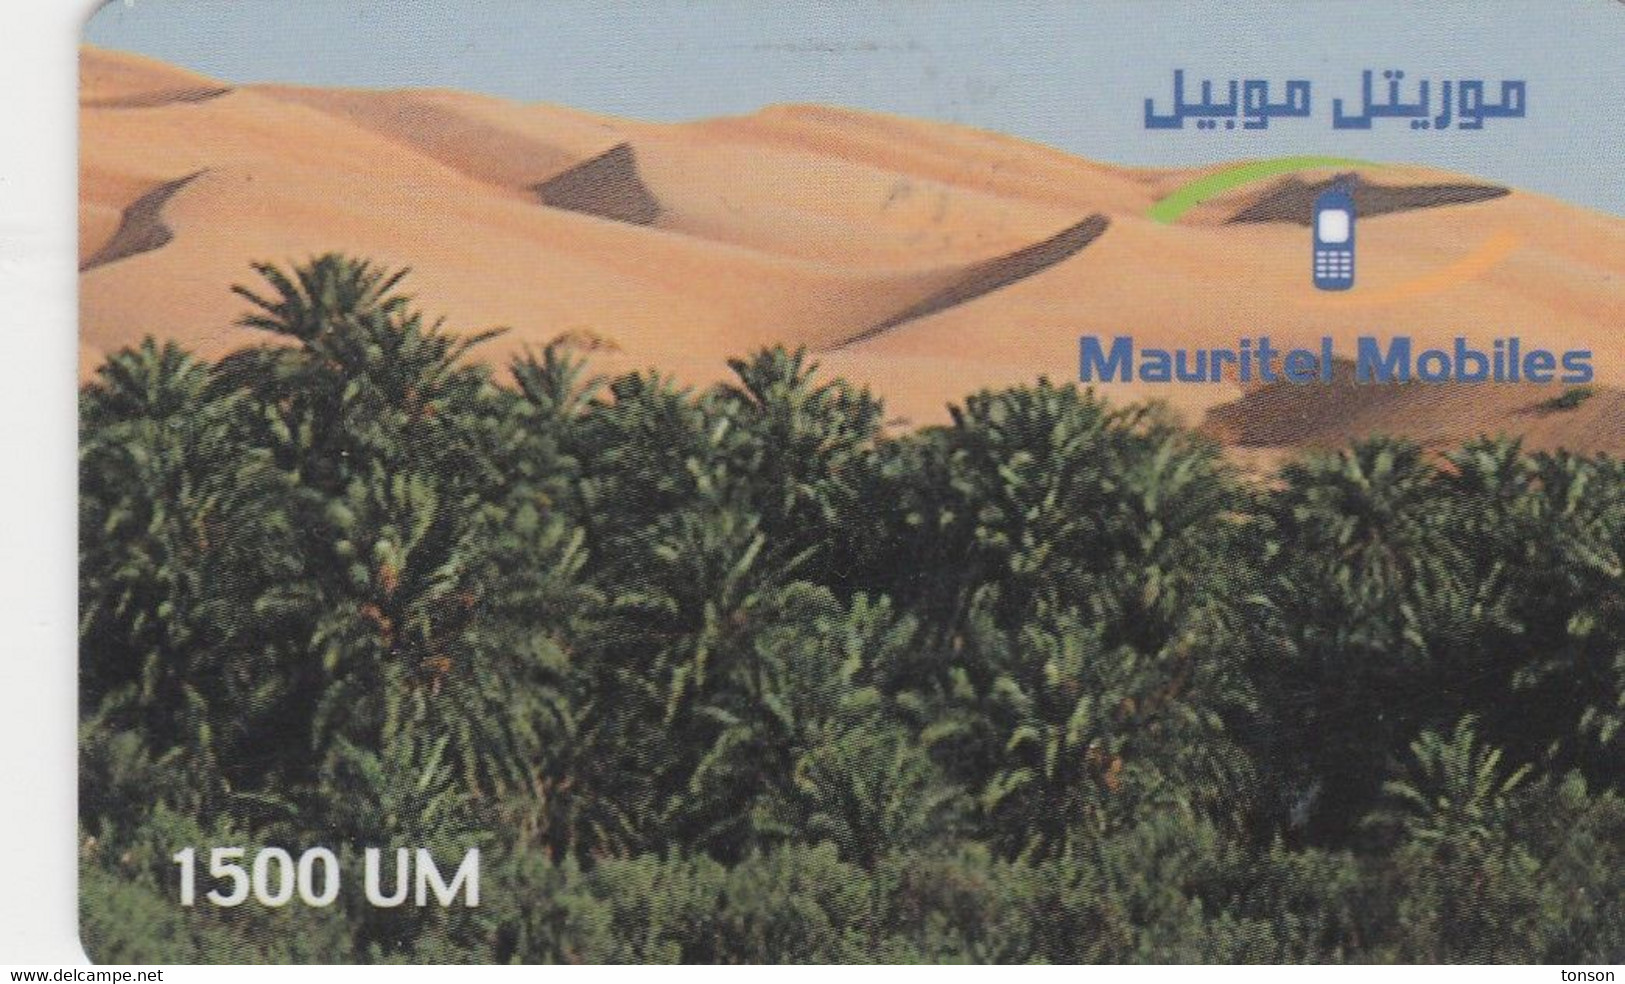 Mauritania, MR-MAU-NAT-0016, 1500 UM,  Désert - 2 (01-12-2001), 2 Scans. - Mauritanien